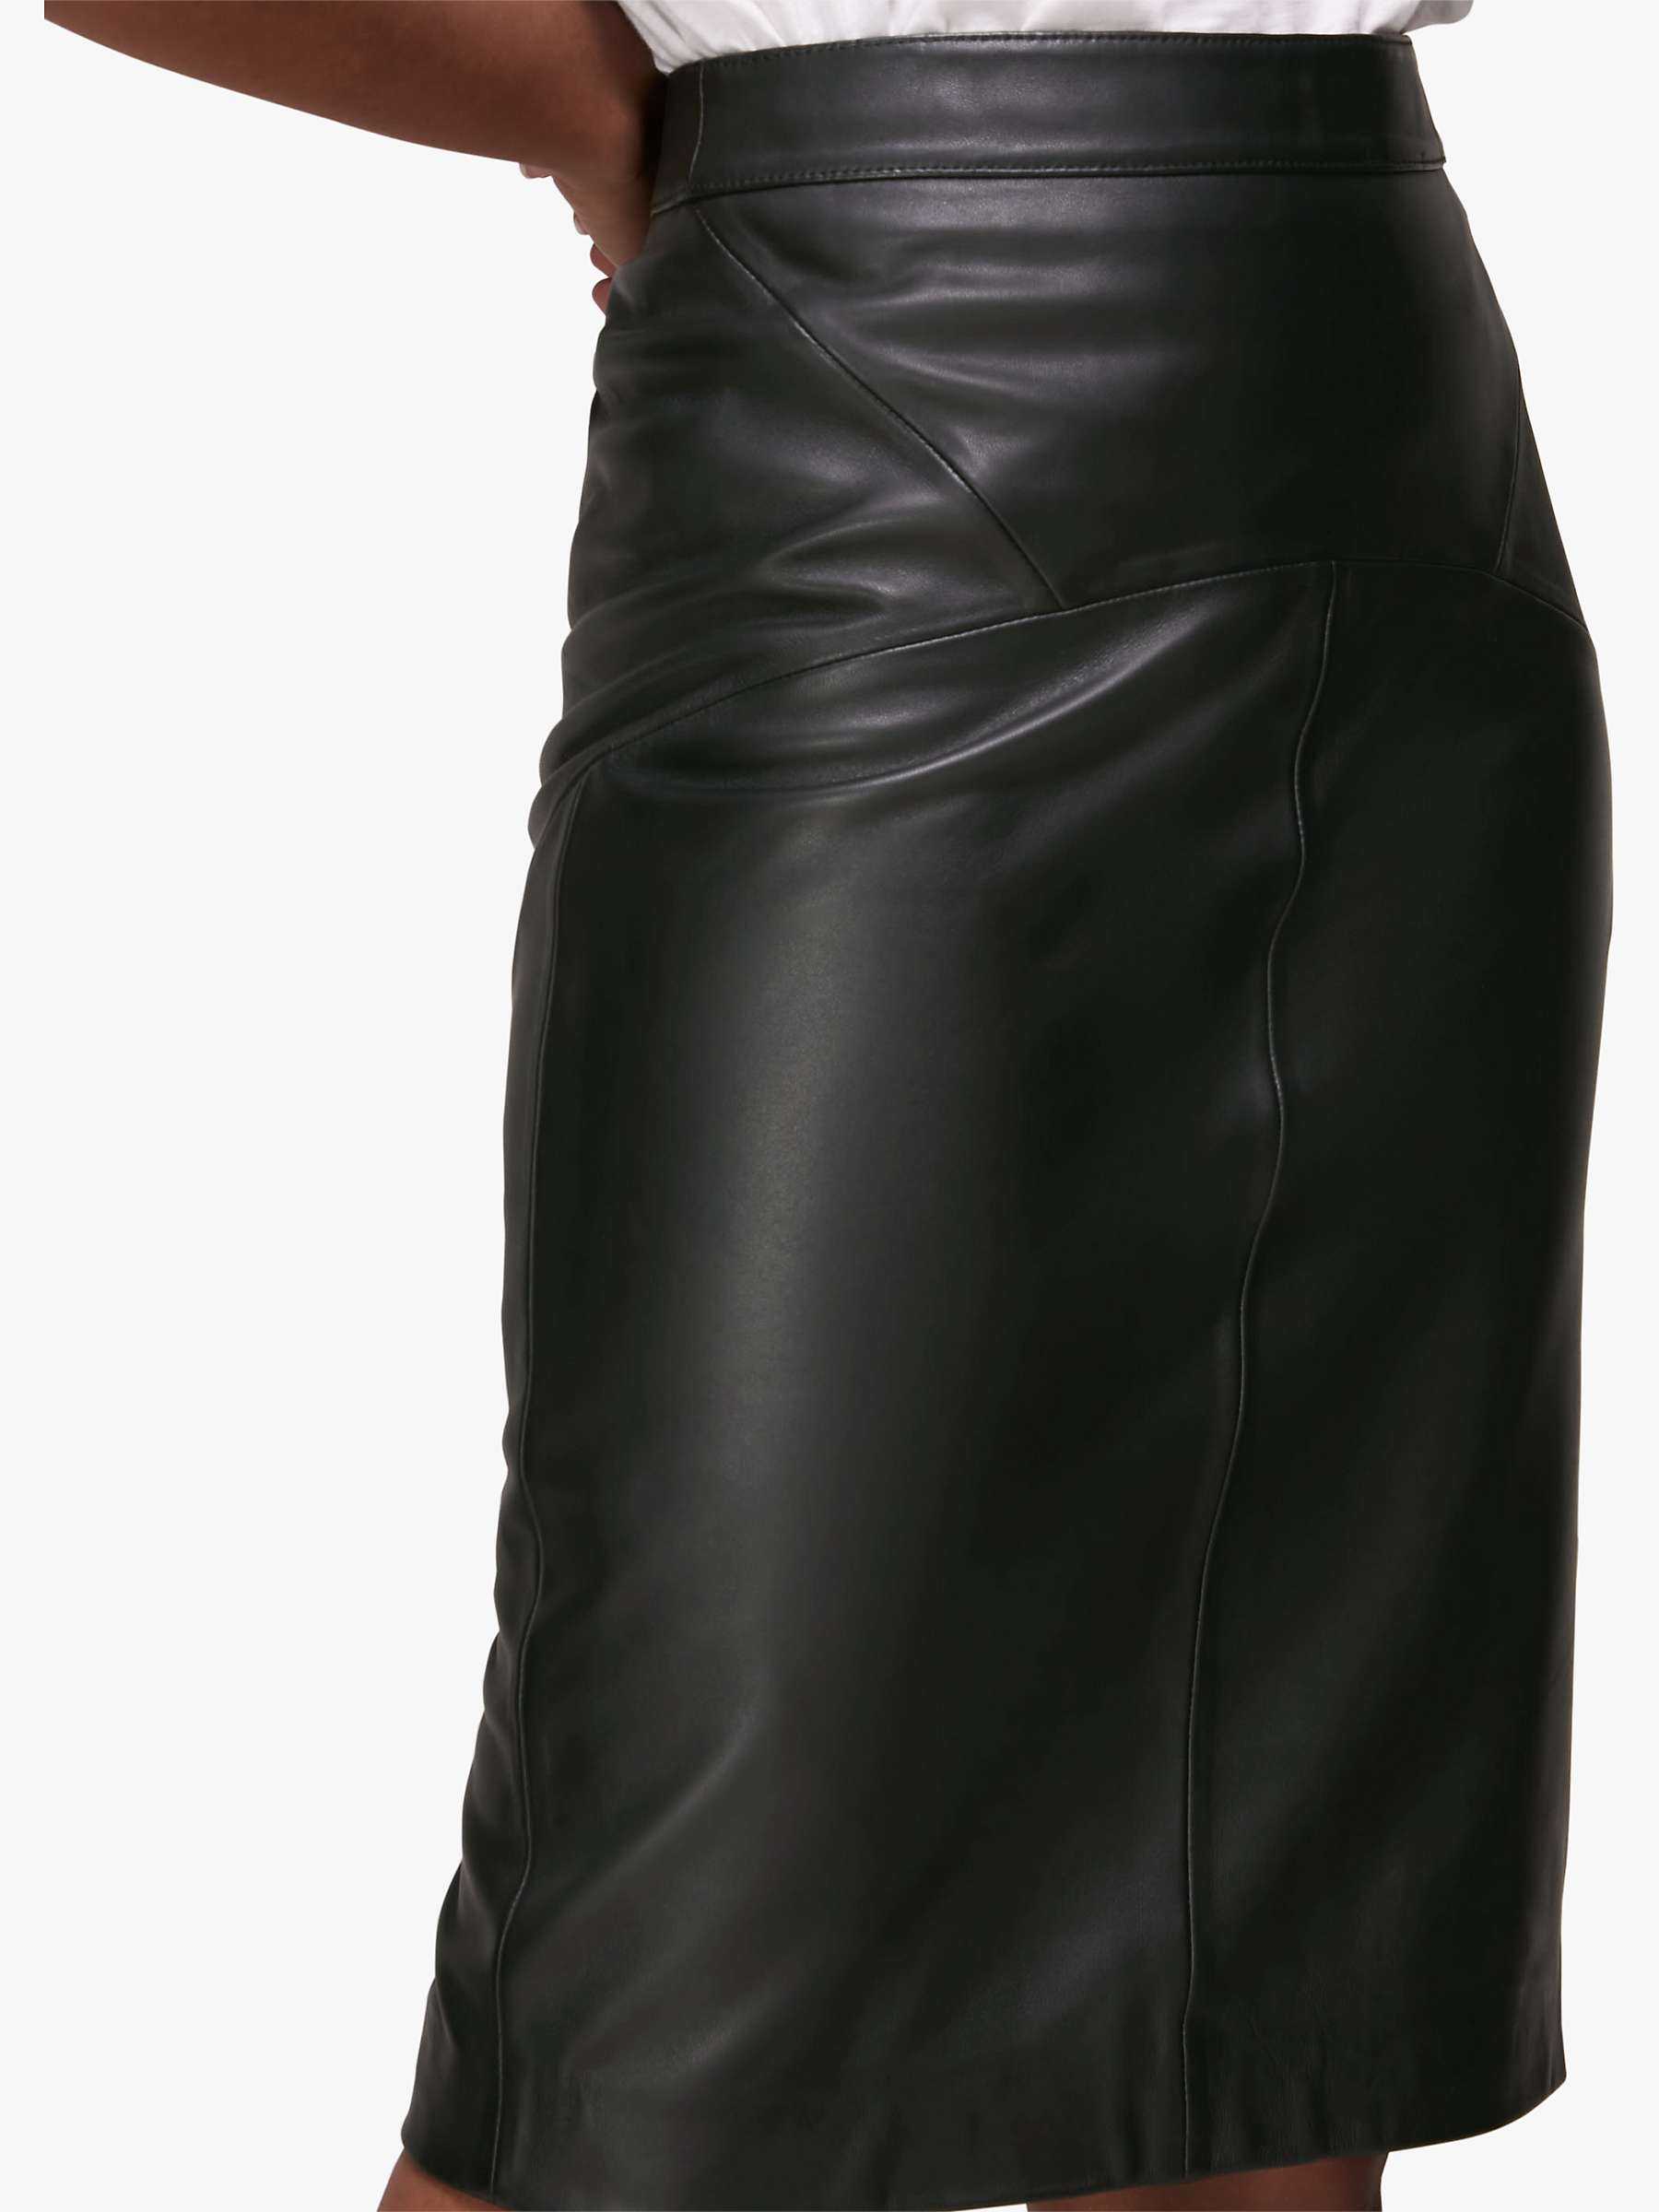 Whistles Kel Leather Pencil Skirt, Black at John Lewis & Partners